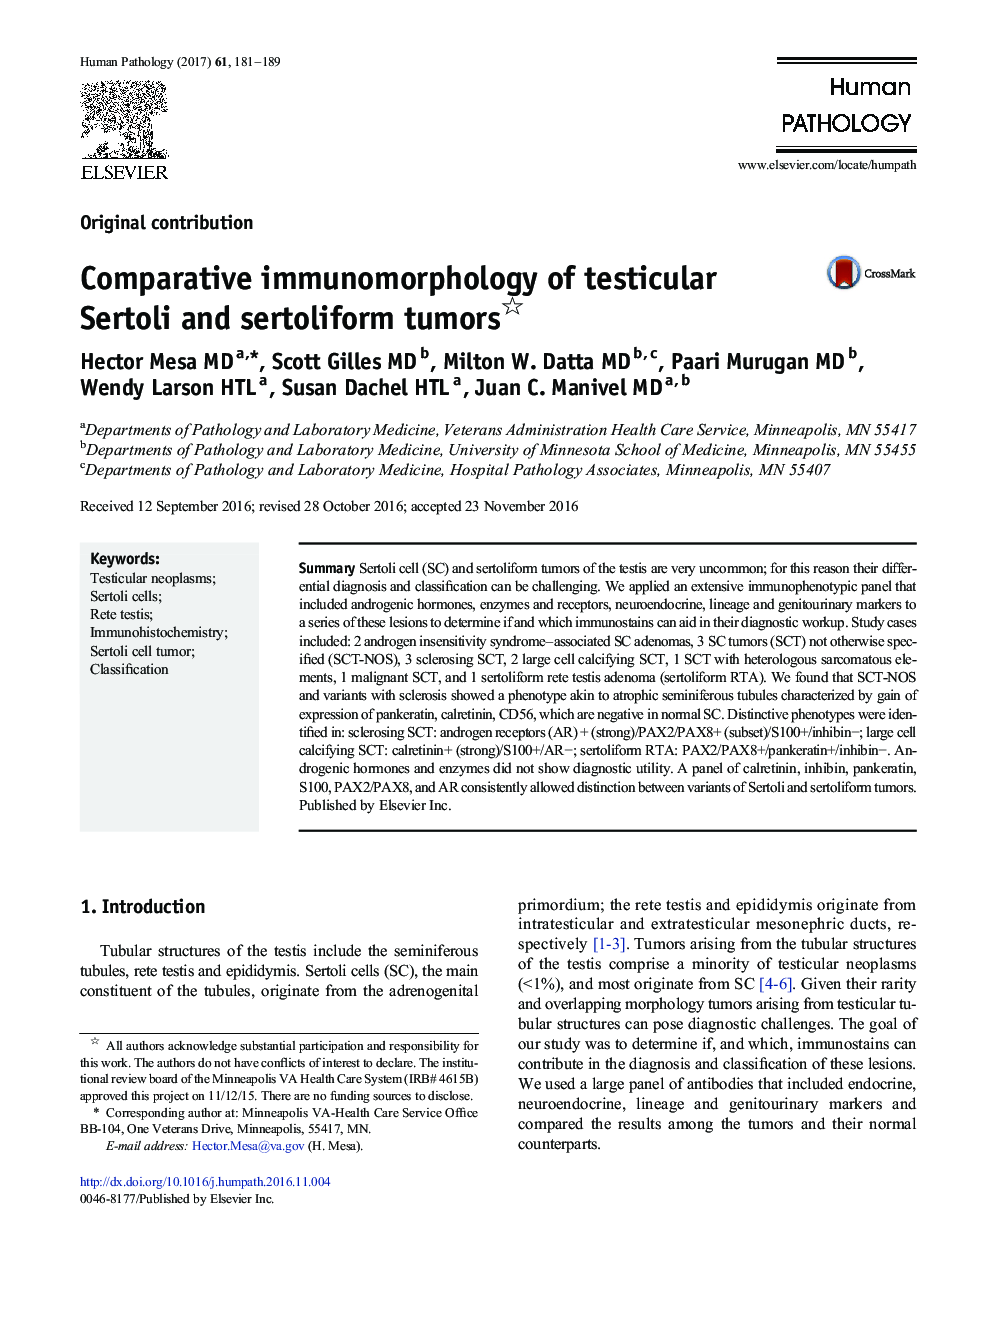 Original contributionComparative immunomorphology of testicular Sertoli and sertoliform tumors